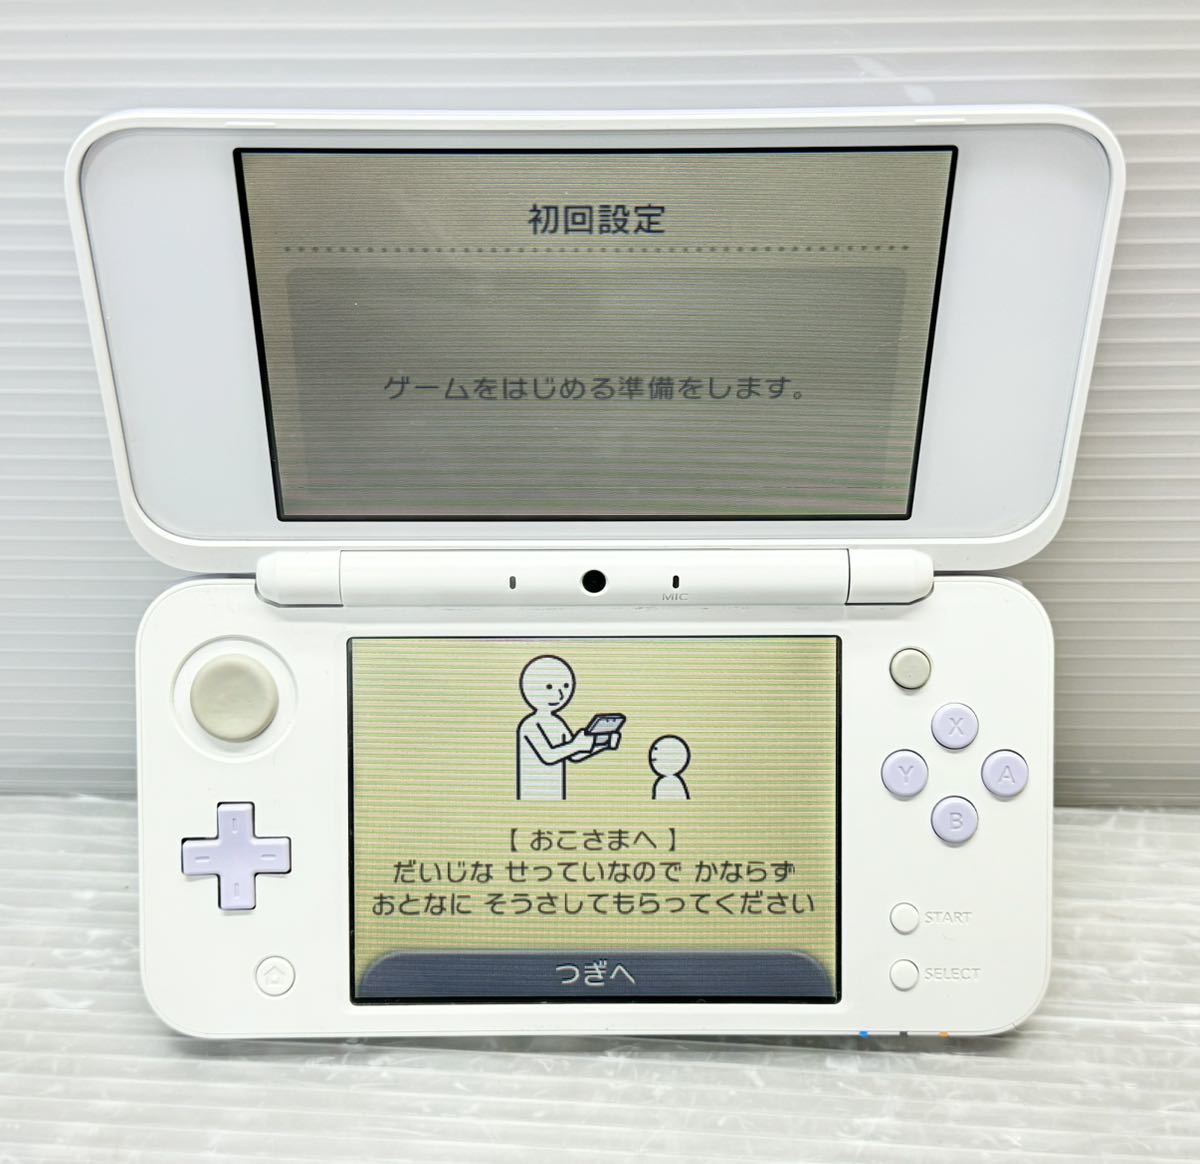 Nintendo newニンテンドー2DS LL (JAN-001) ホワイト×ラベンダー 本体のみ 初期化済み 純正ACアダプタ付き 中古動作確認済